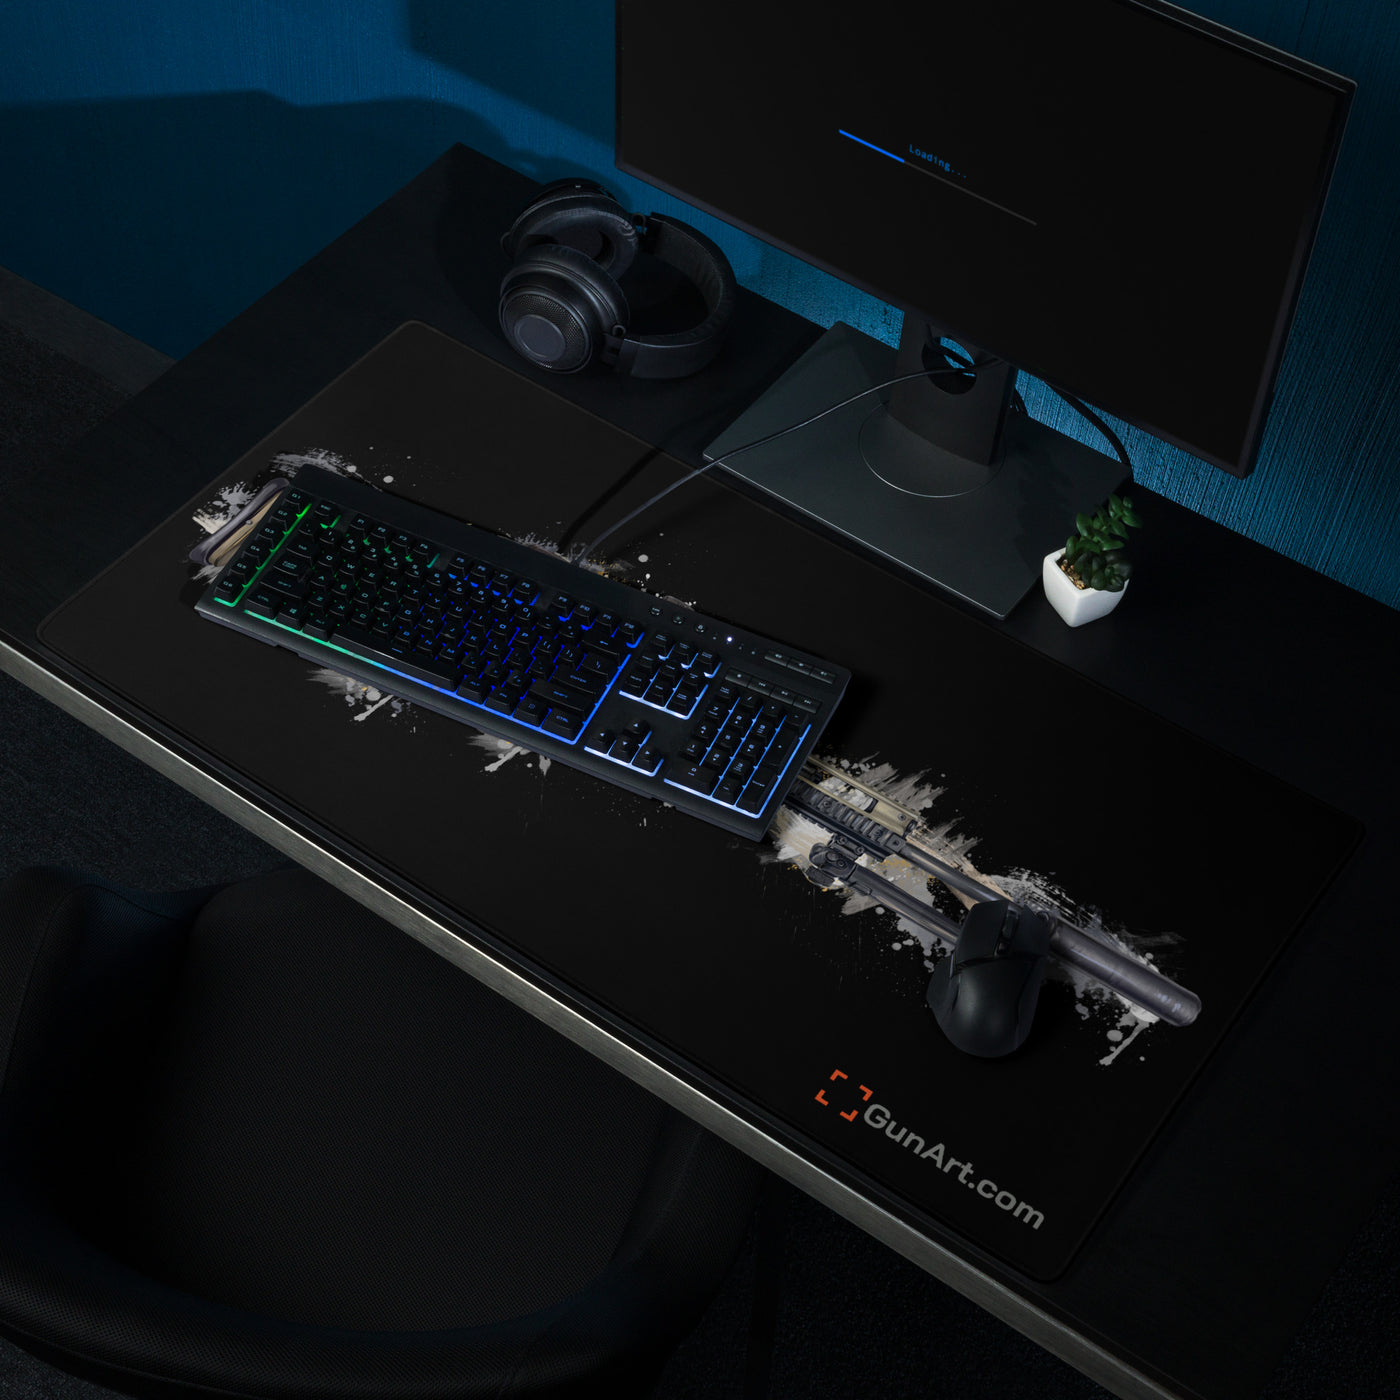 Socom Sniper Rifle Gaming Mouse Pad - Black Background